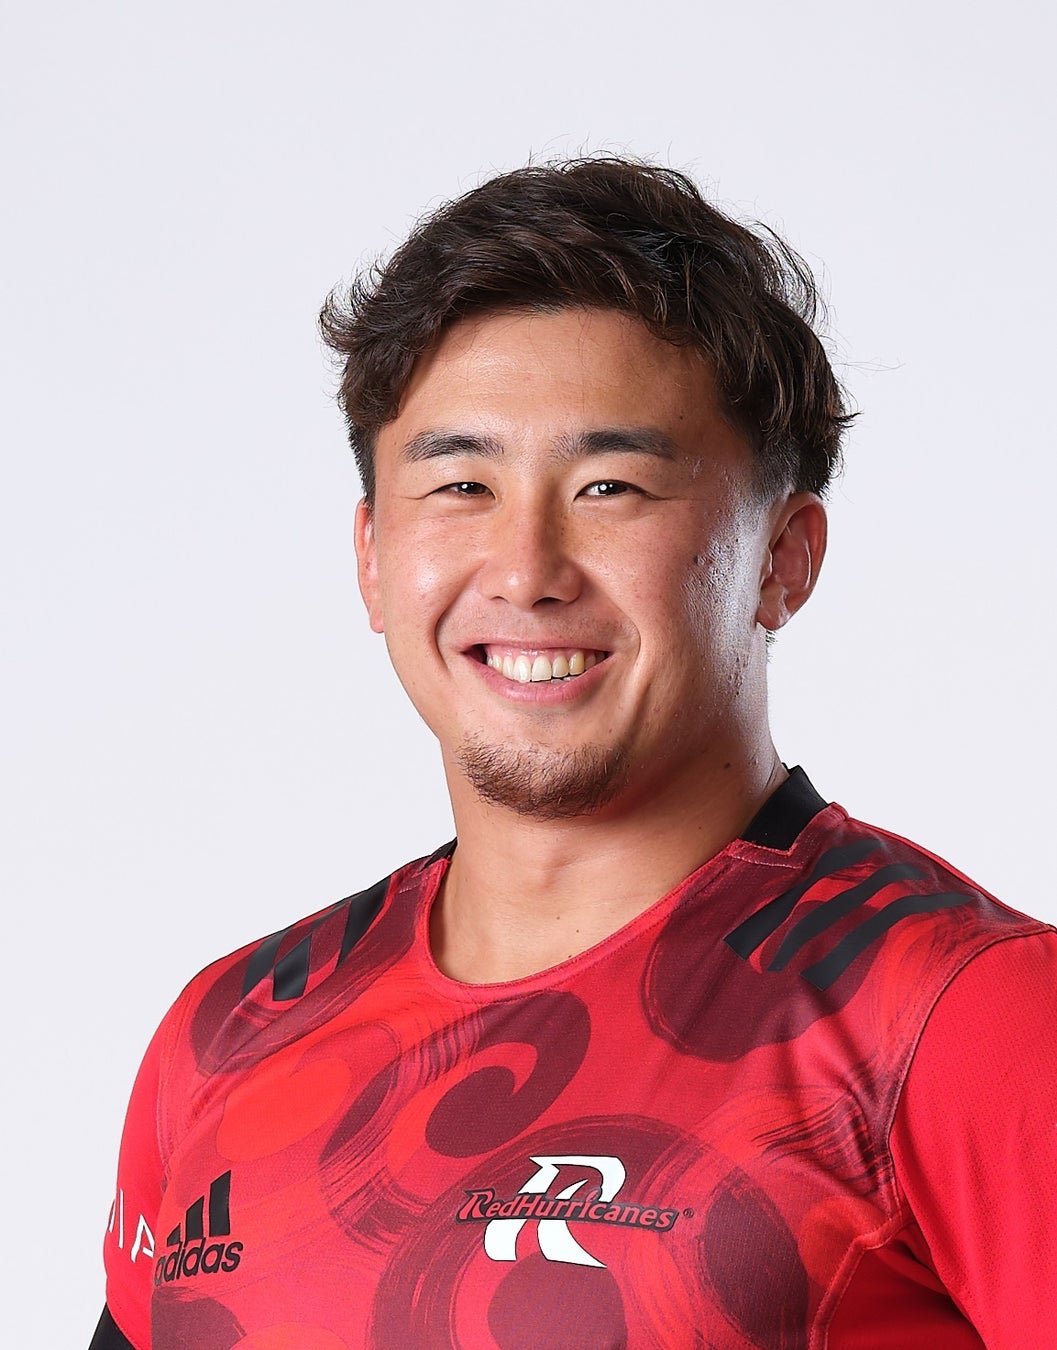 JAPAN RUGBY LEAGUE ONEのトッププレイヤーである佐藤大朗選手（NTTドコモレッドハリケーンズ大阪所属）が、スポチュニティアンバサダーに就任！！